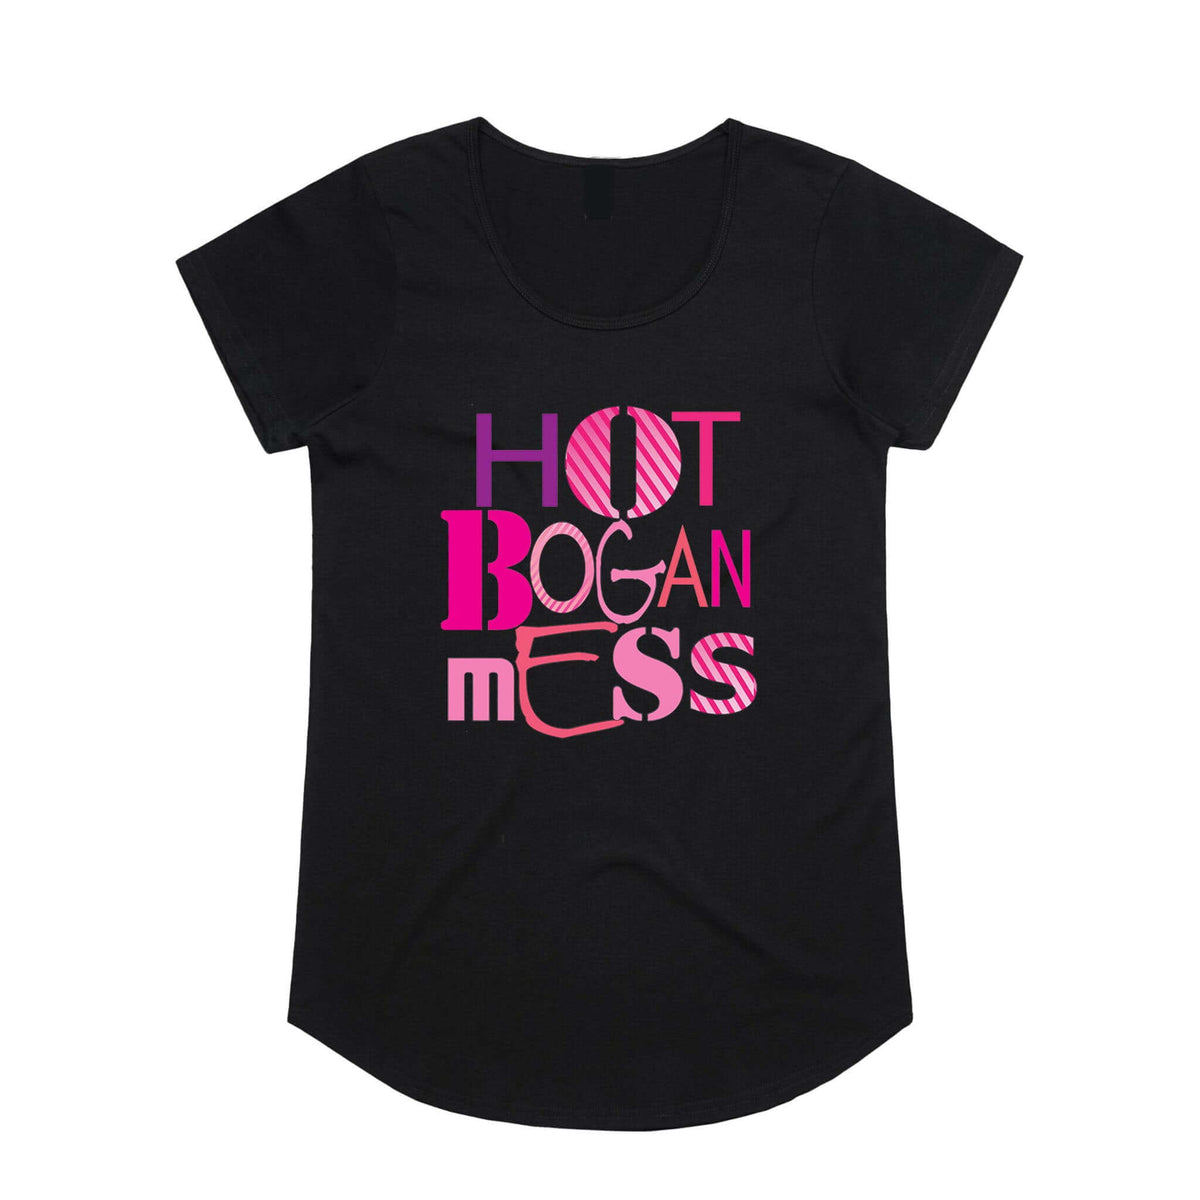 Hot Bogan Mess -  The Tarty Party tee!